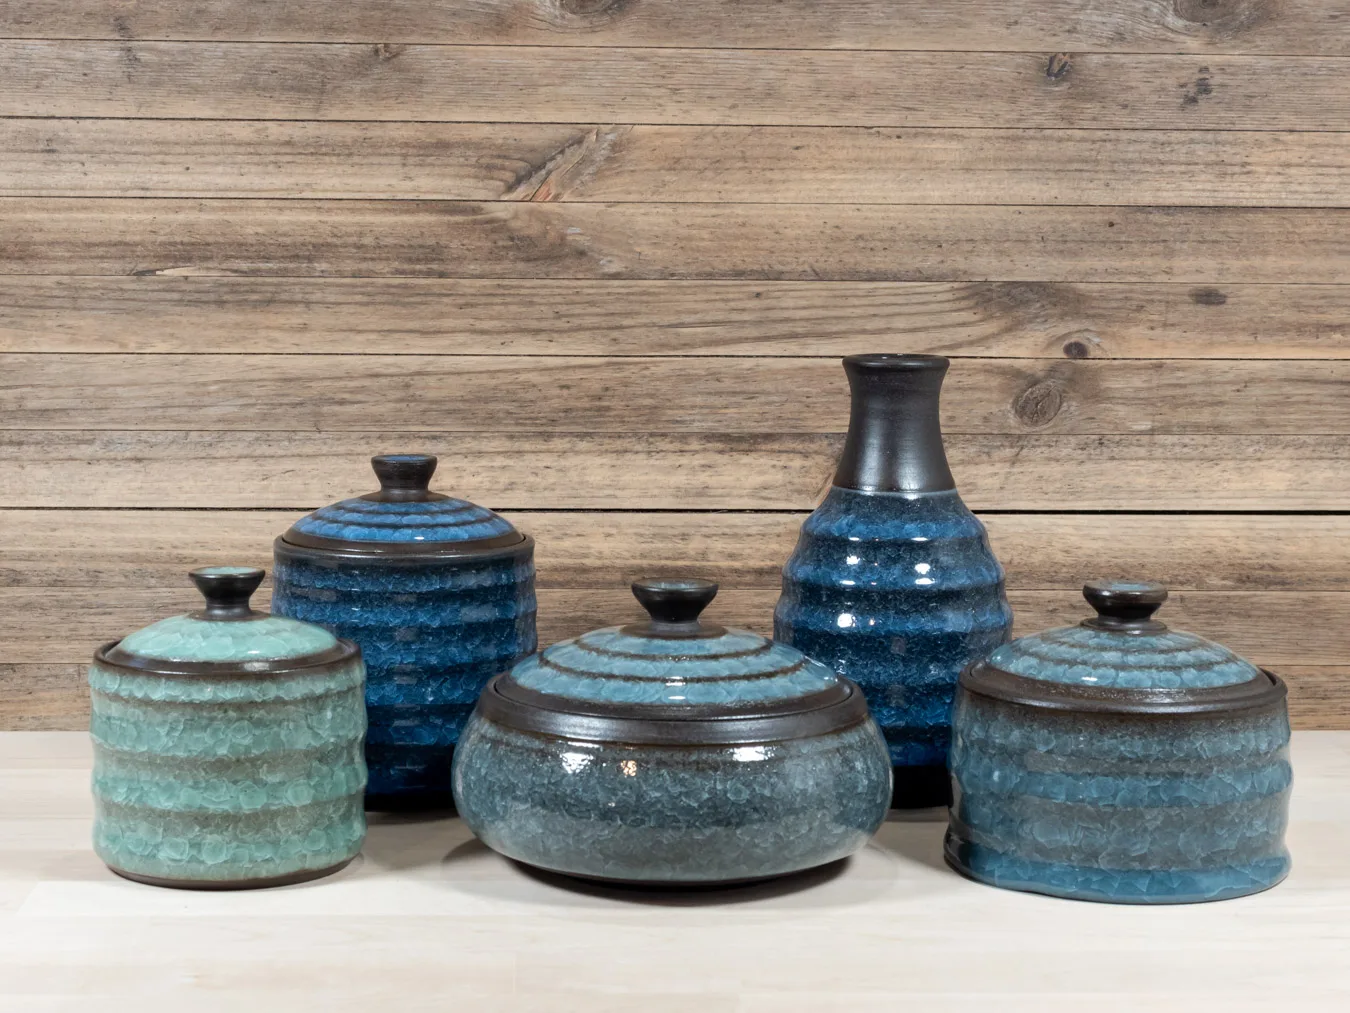 Ceramic ware with Ice-Crackle glaze